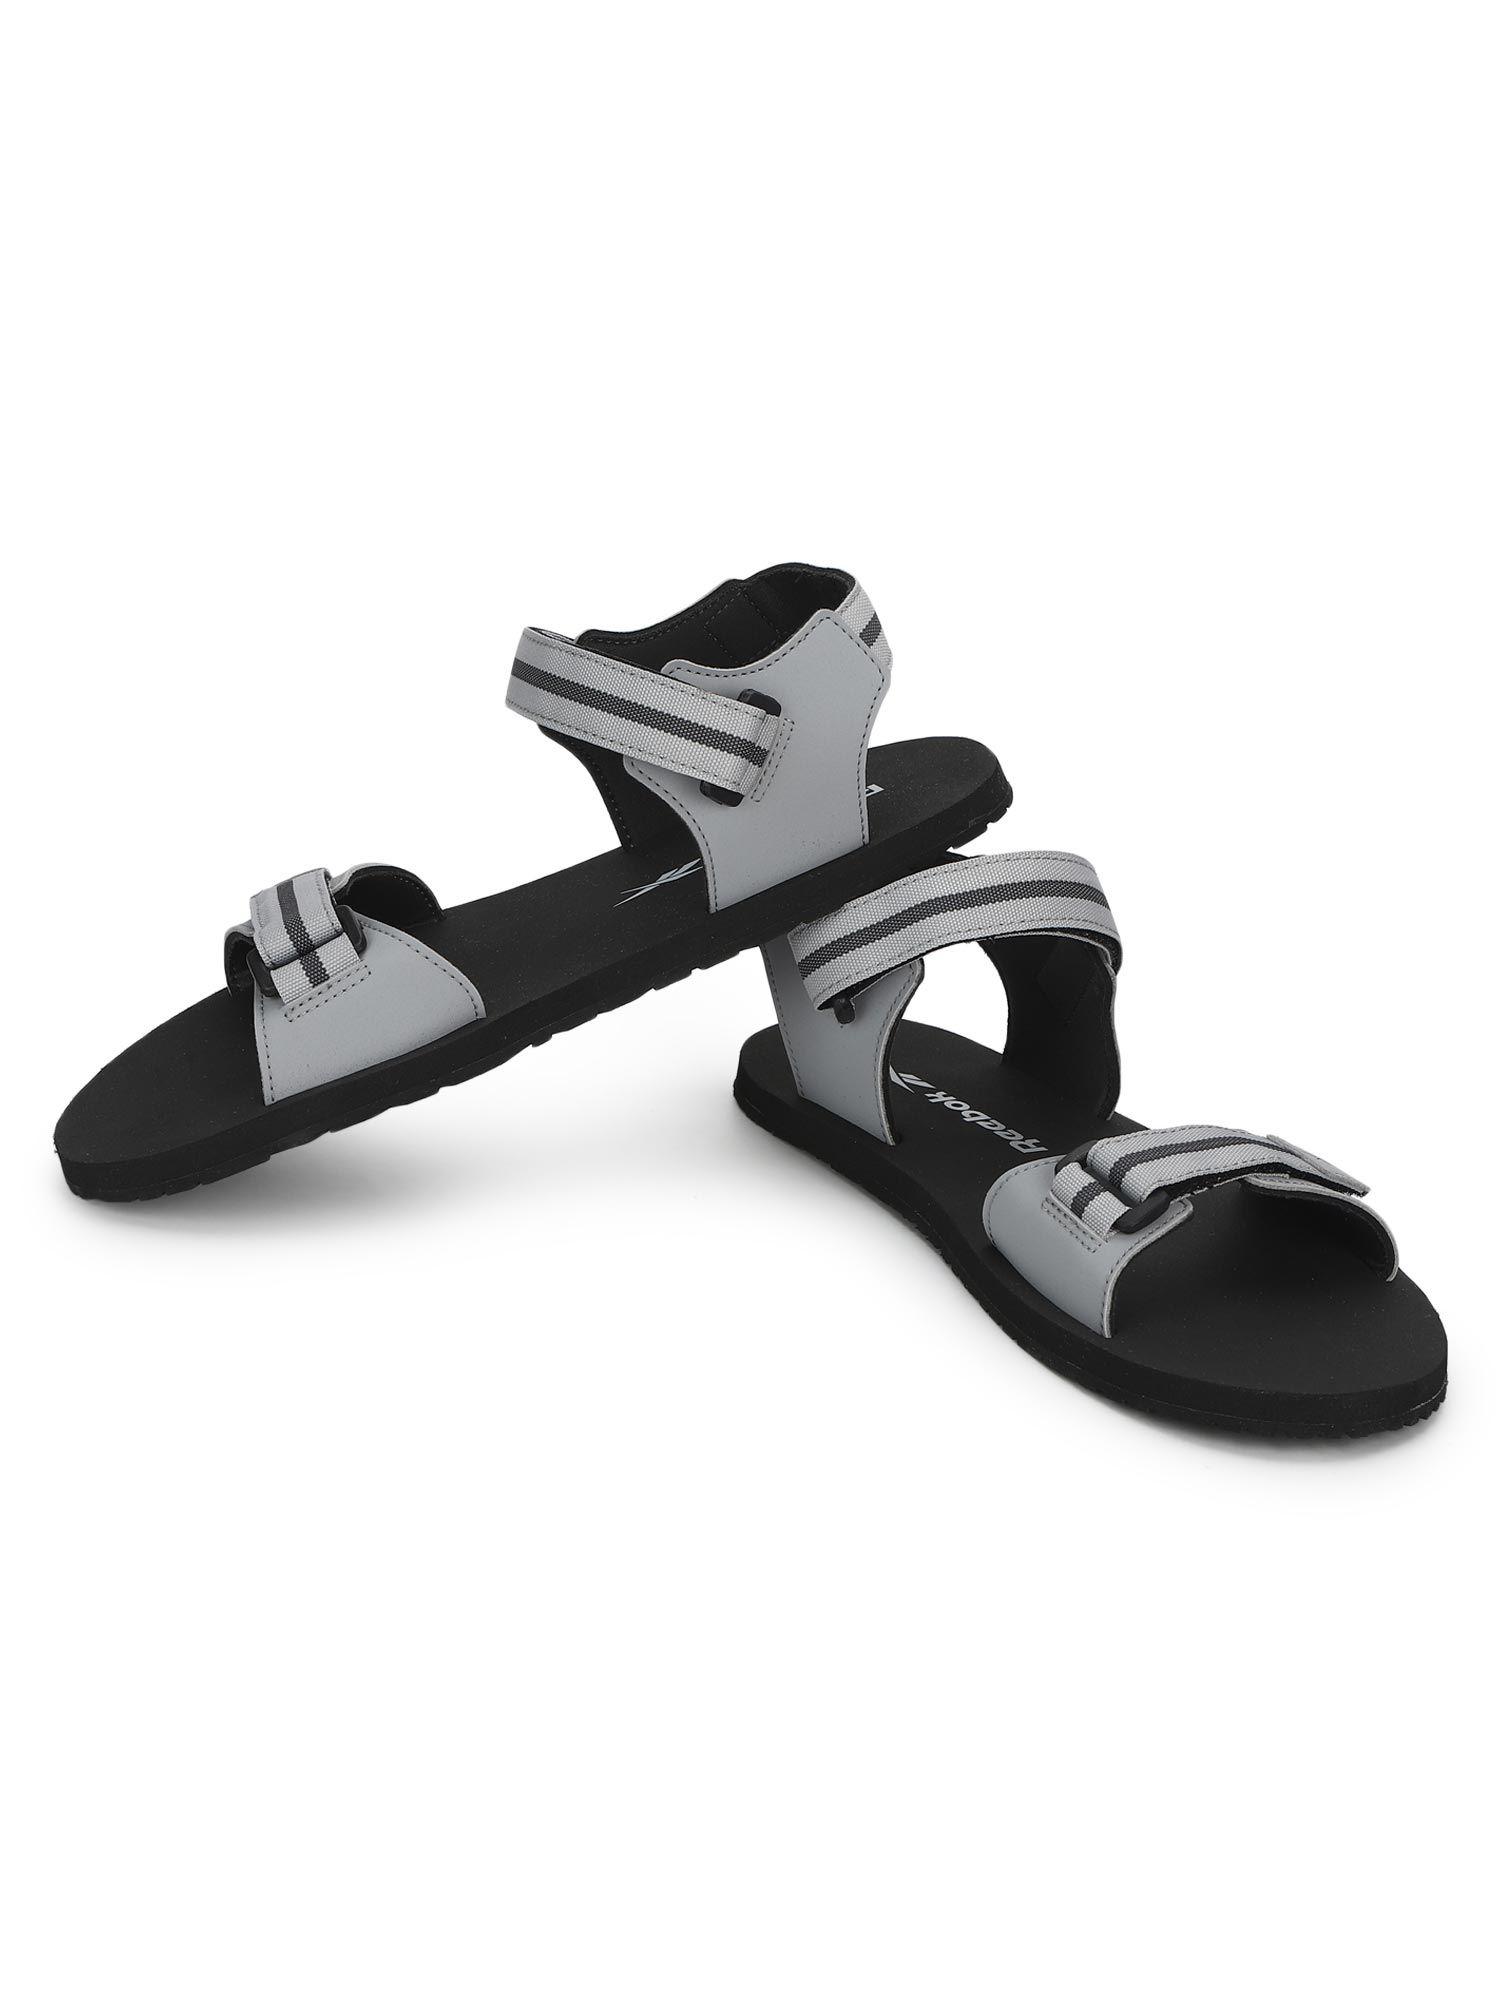 epic sandal grey sandals